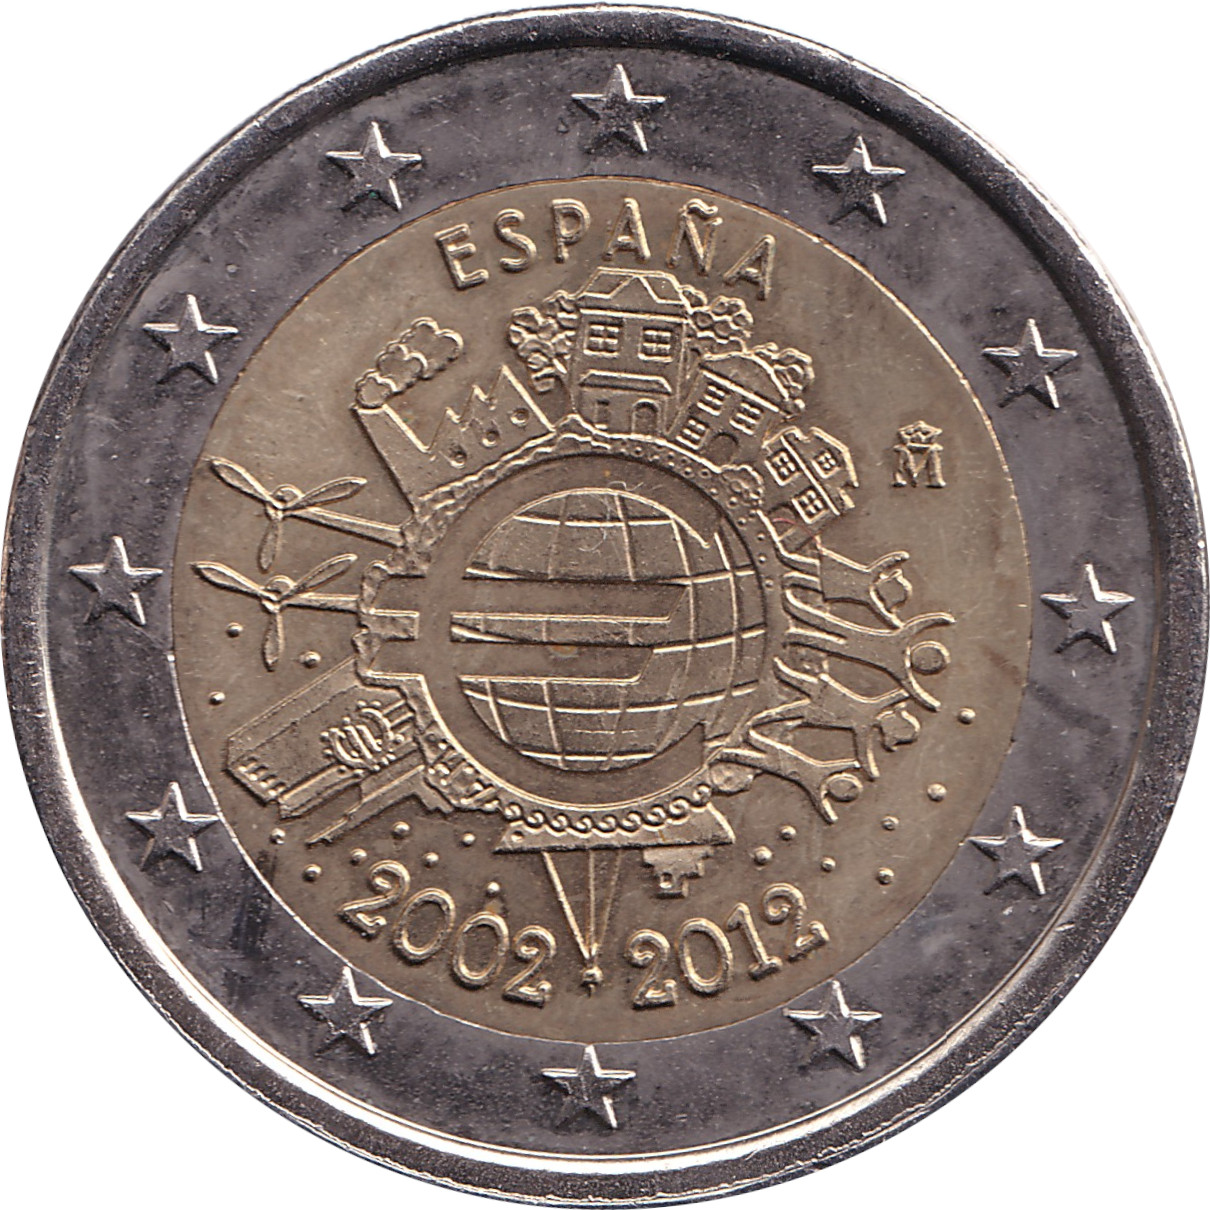 2 euro - Mise en circulation de l'Euro - Espagne